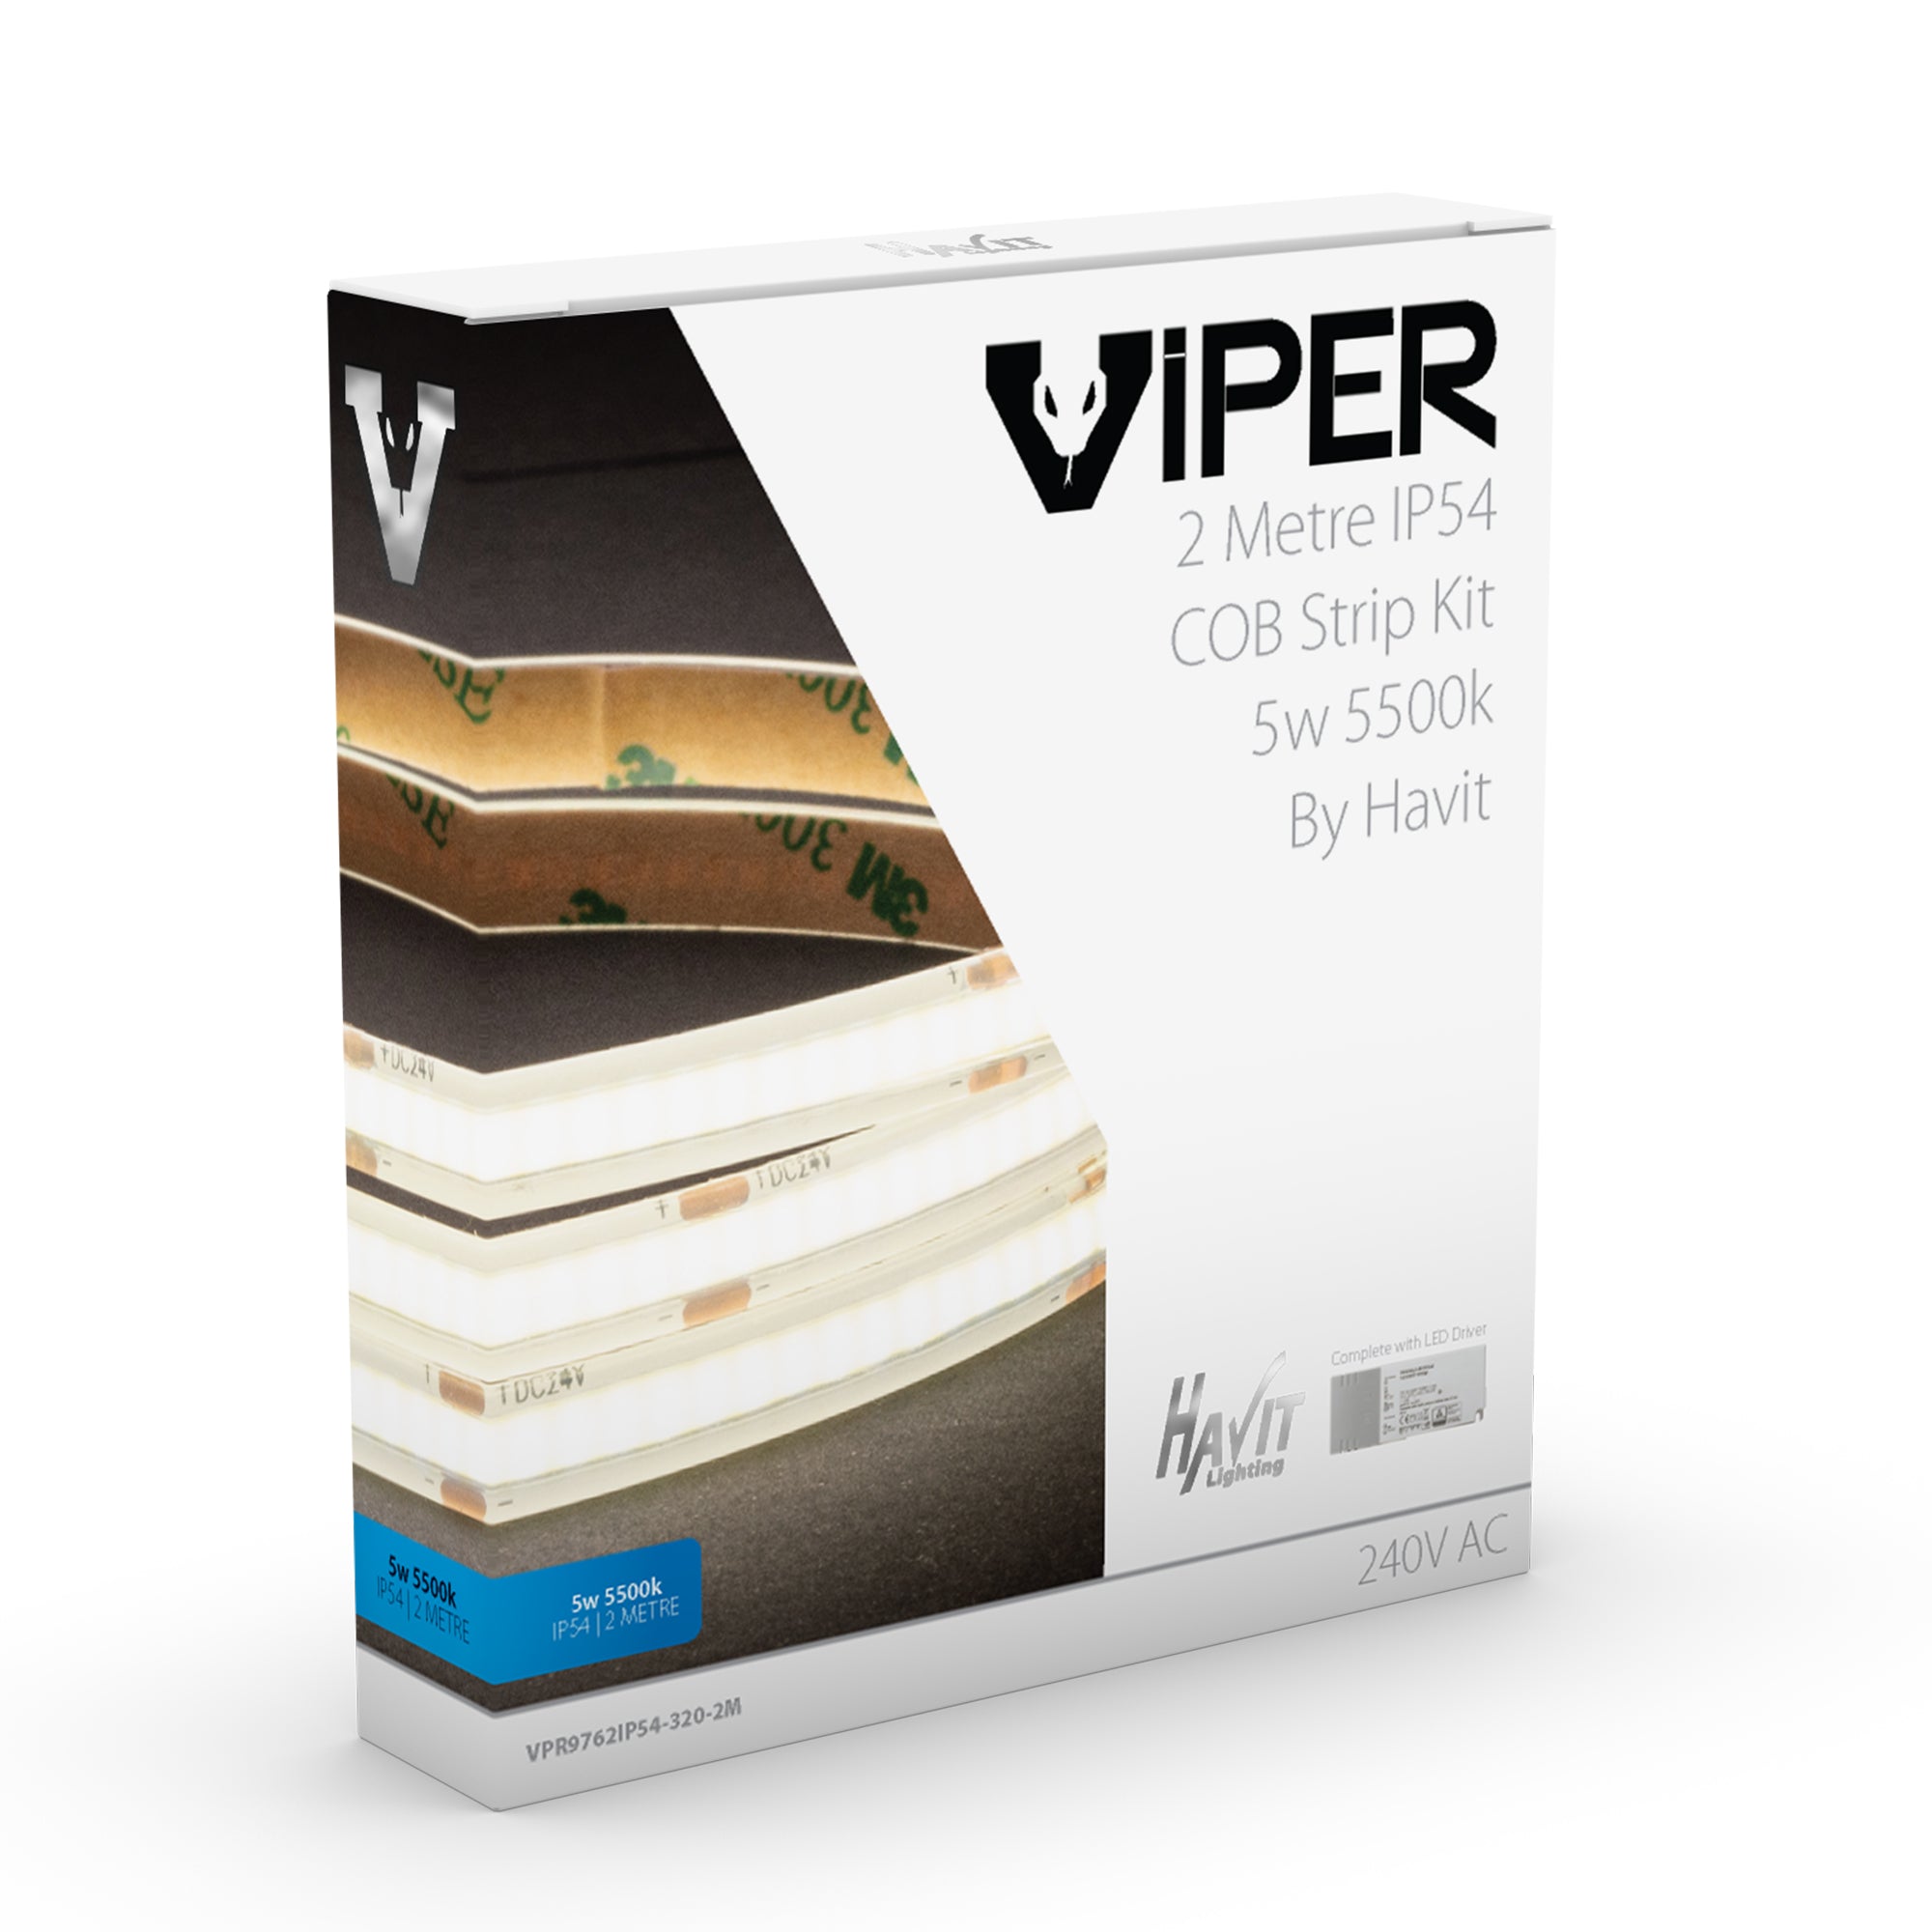 VPR9762IP54-320-2M - Viper COB 5w Per Metre 2m LED Strip kit 5500k